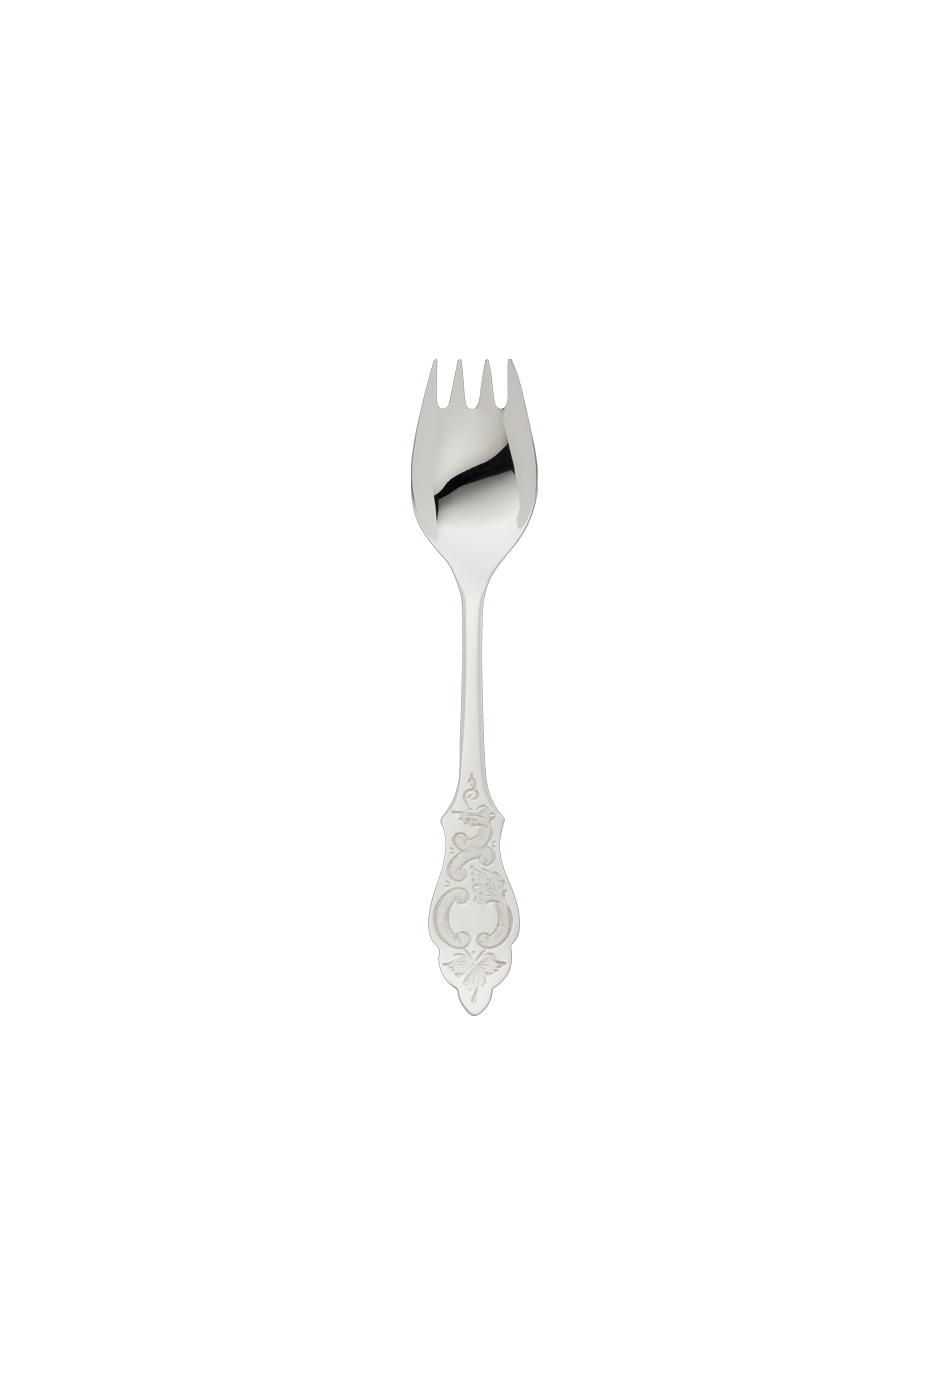 Ostfriesen Oyster Fork (925 Sterling Silver)